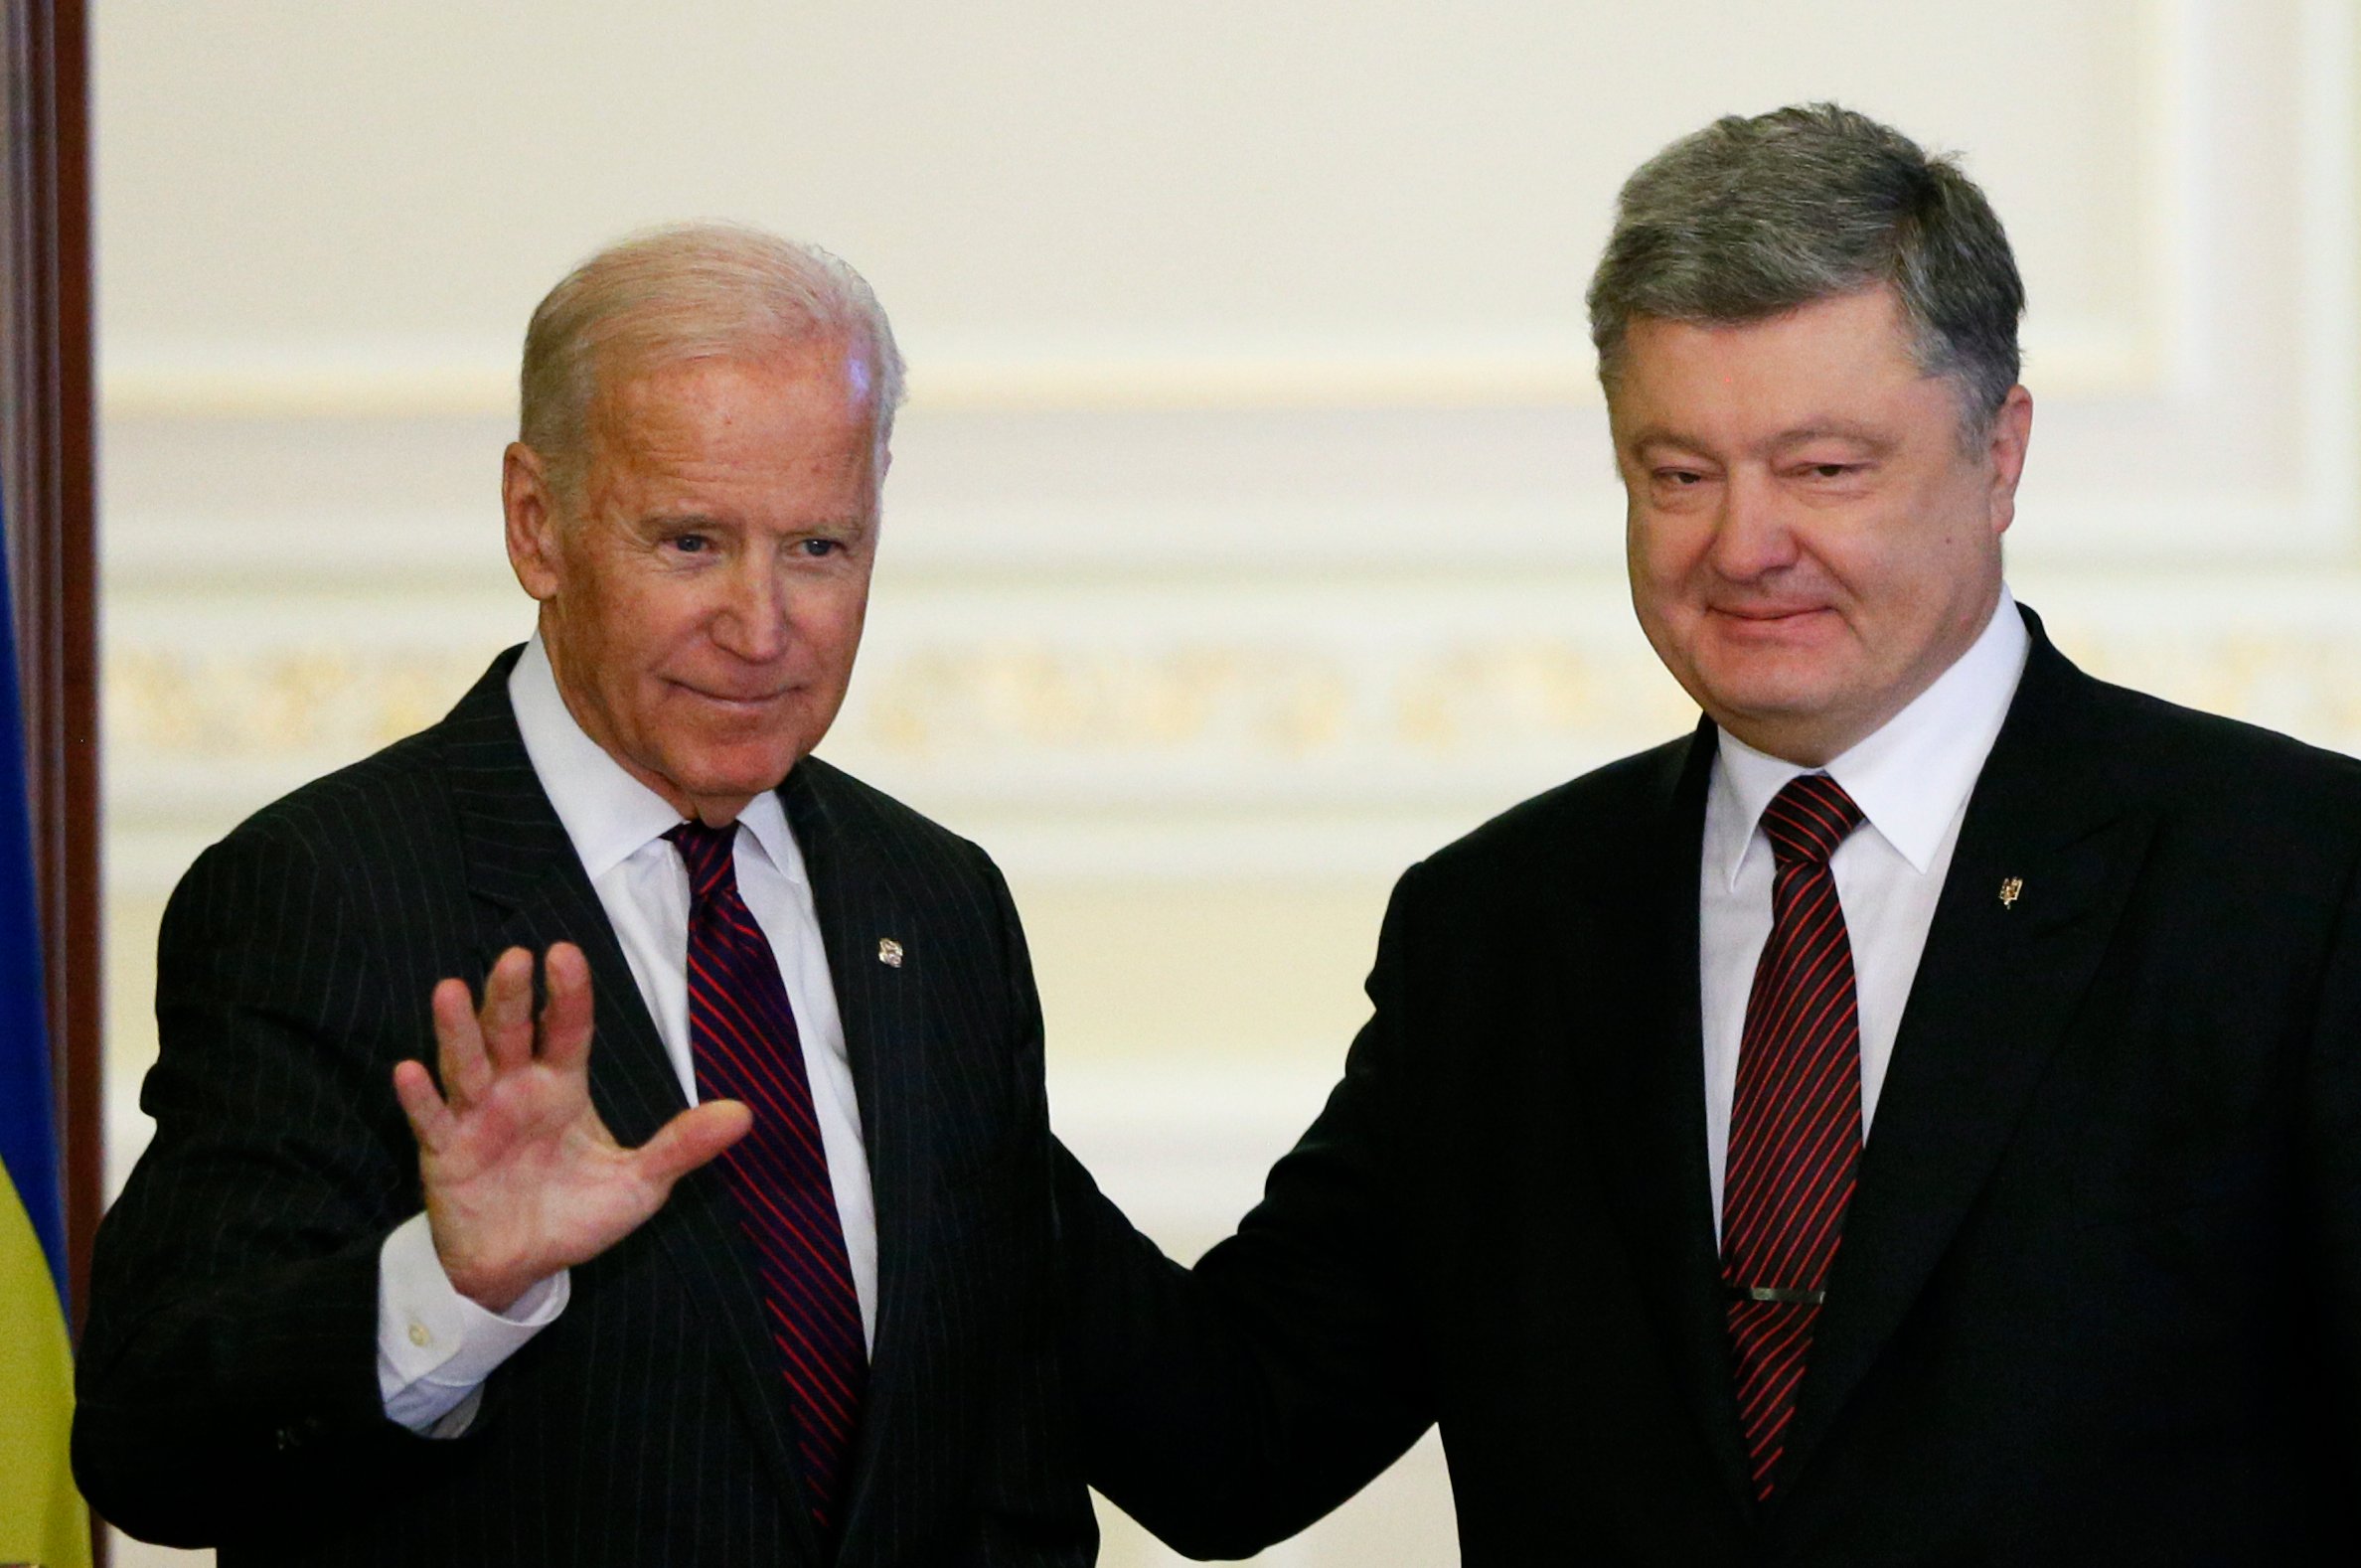 Ukrainian President Petro Poroshenko (R) and U.S. Vice President Joe Biden attend a news conference in Kiev, Ukraine, January 16, 2017. REUTERS/Gleb Garanich